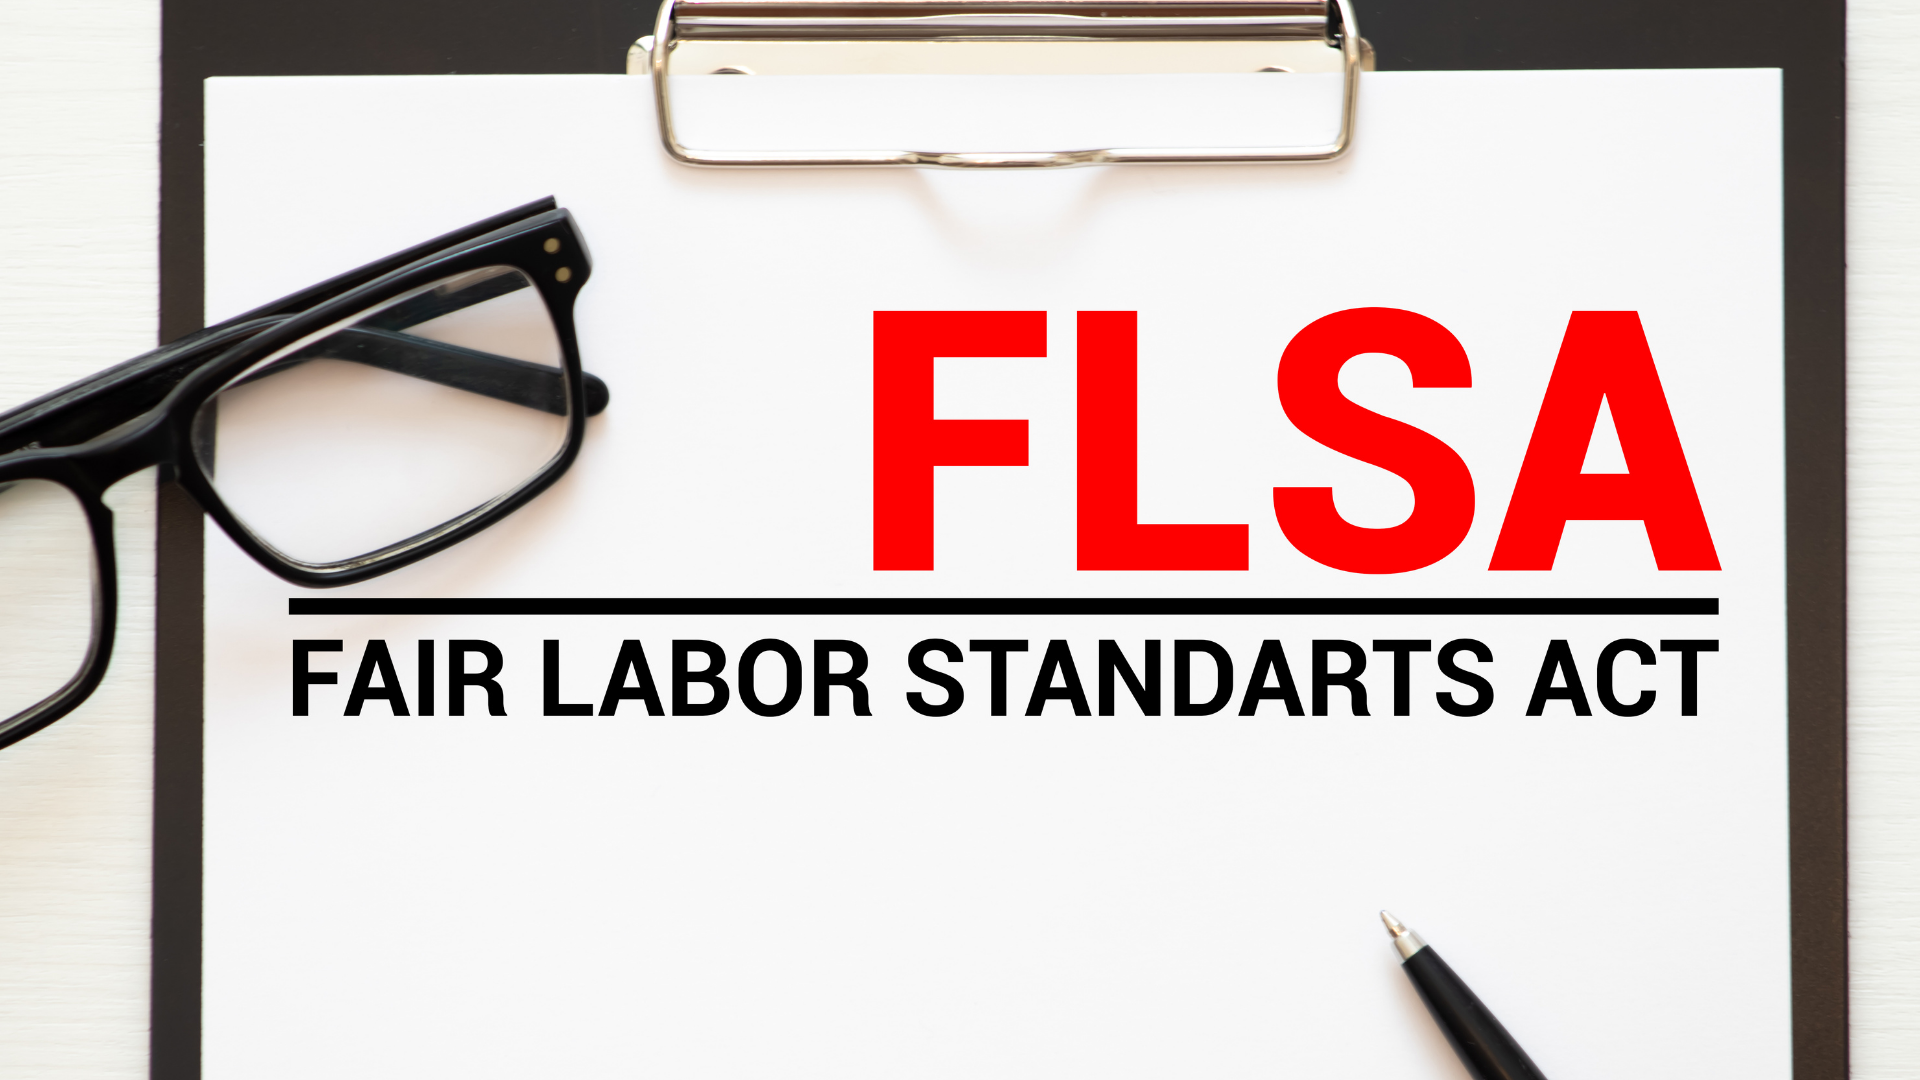 United States Supreme Court to Examine “Salary Basis” Test for FLSA